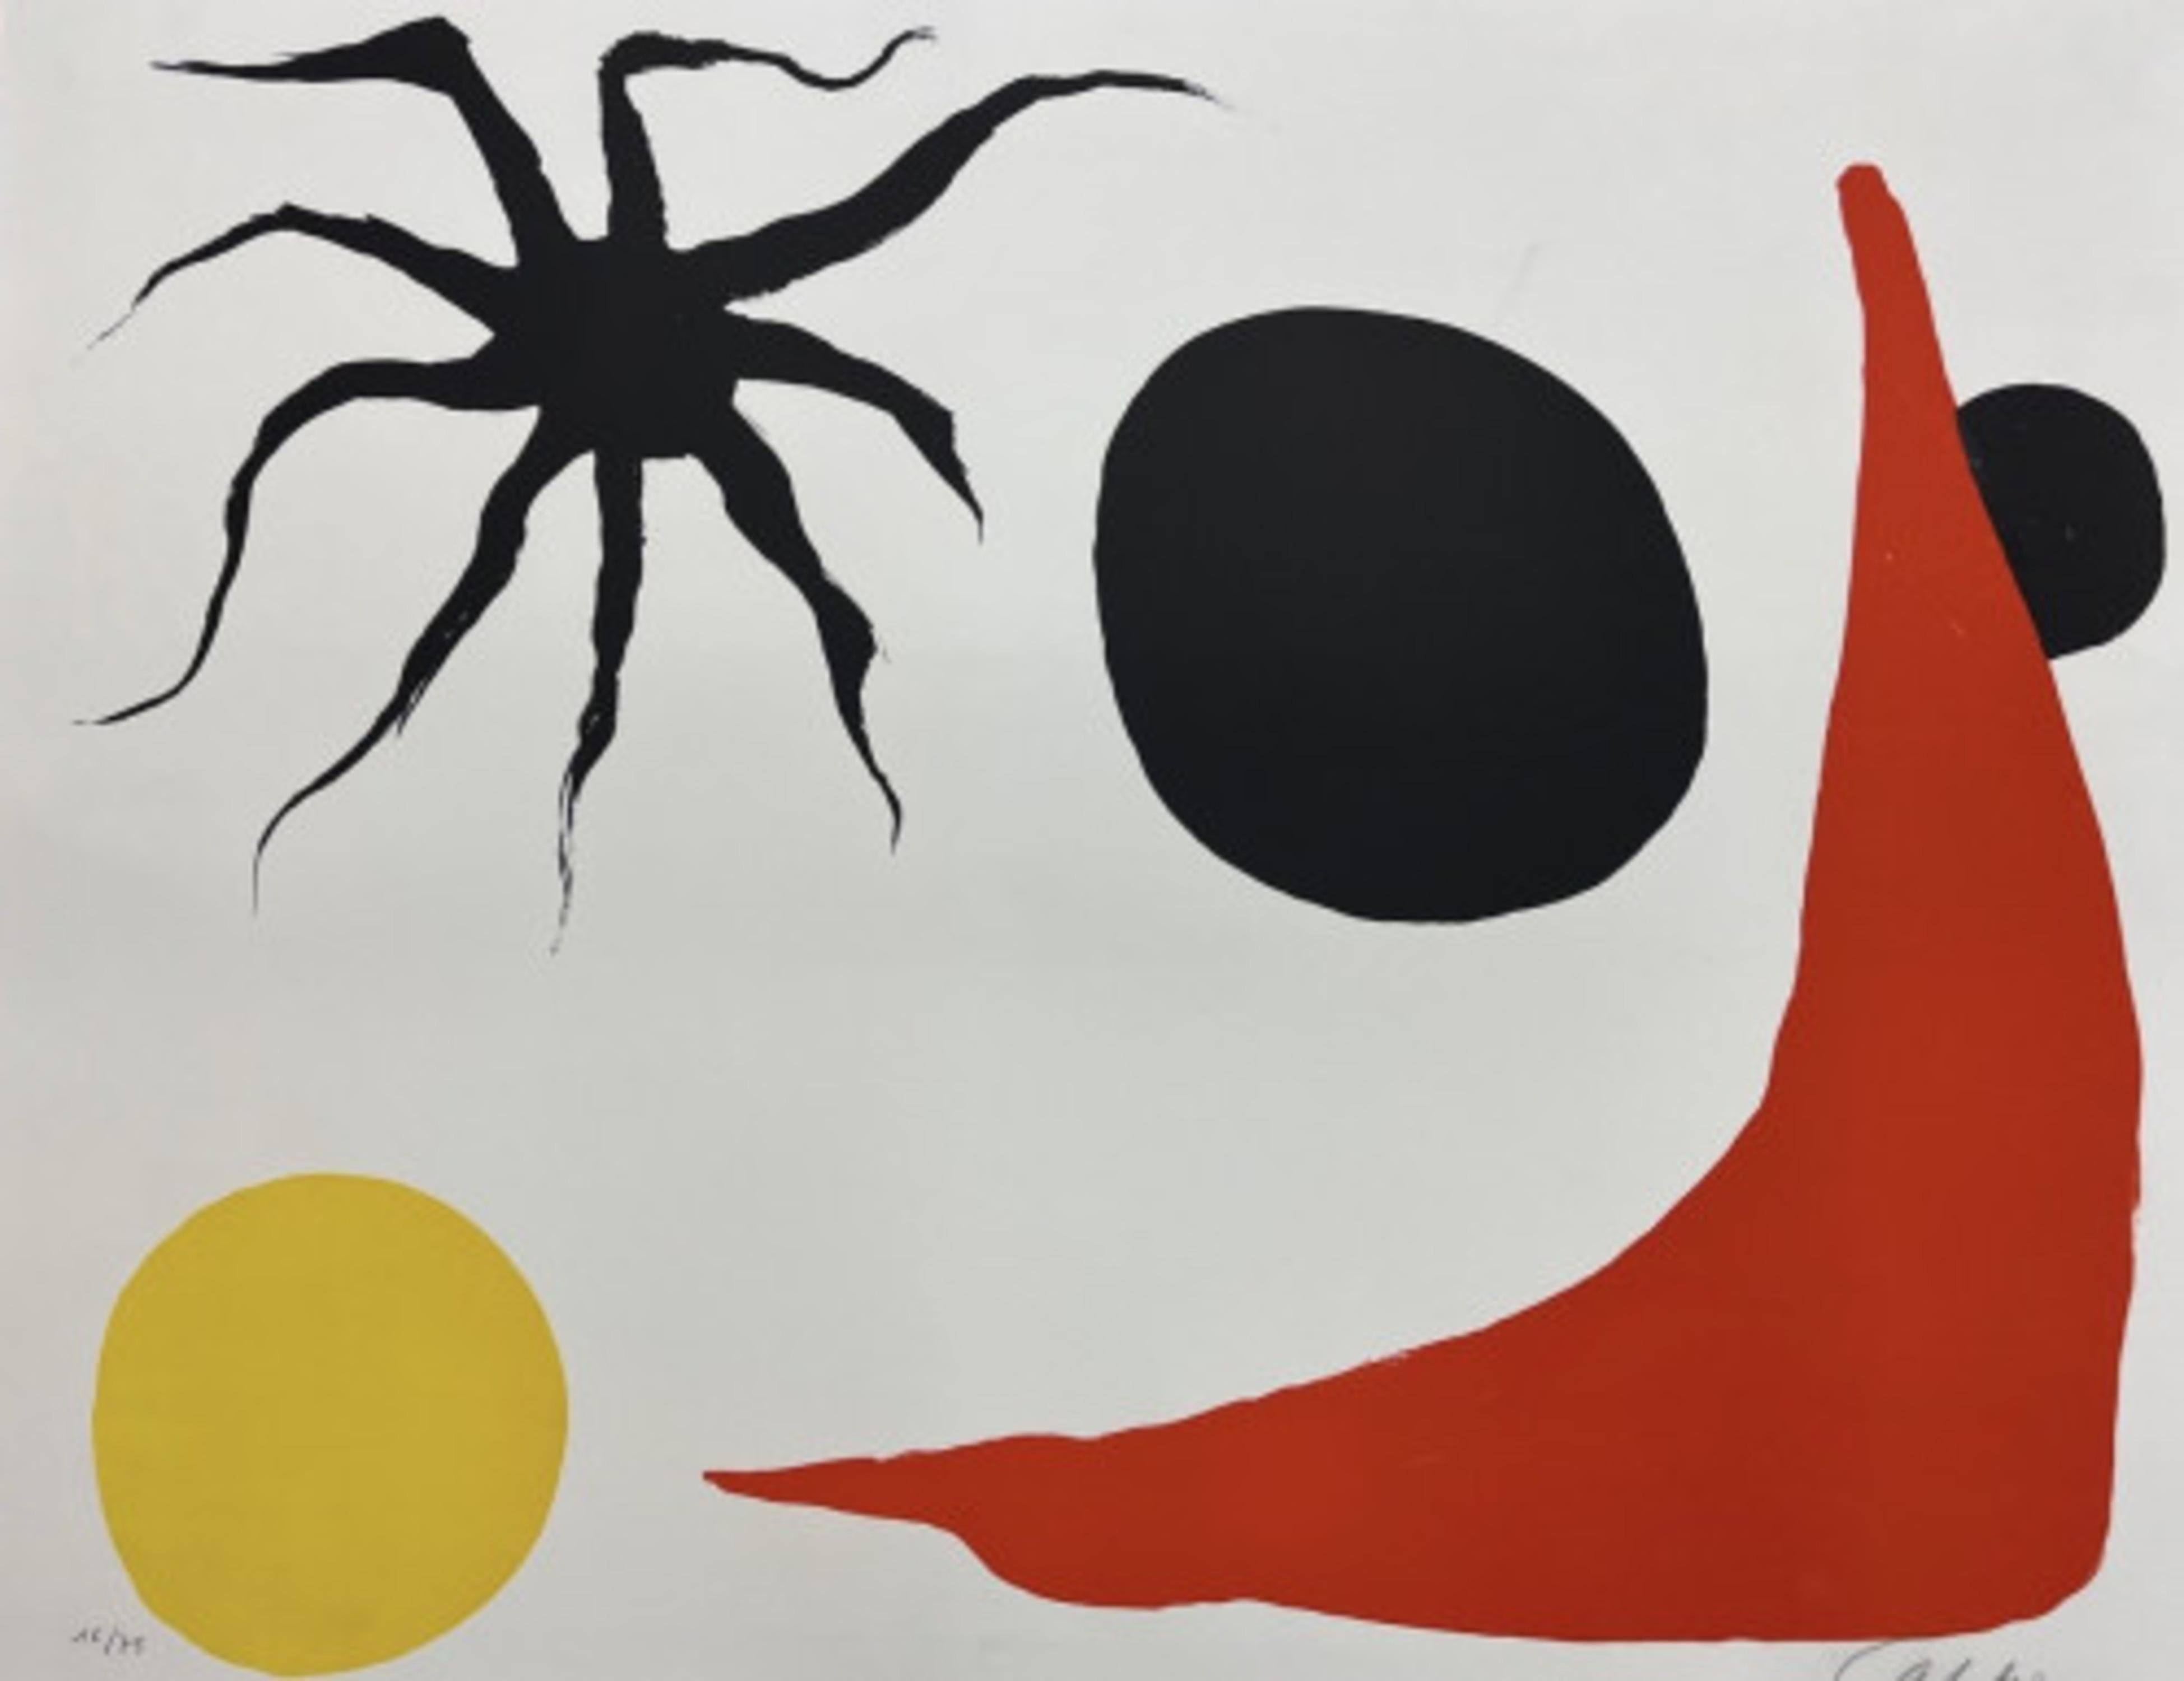 Chaussette Rouge - Print by Alexander Calder